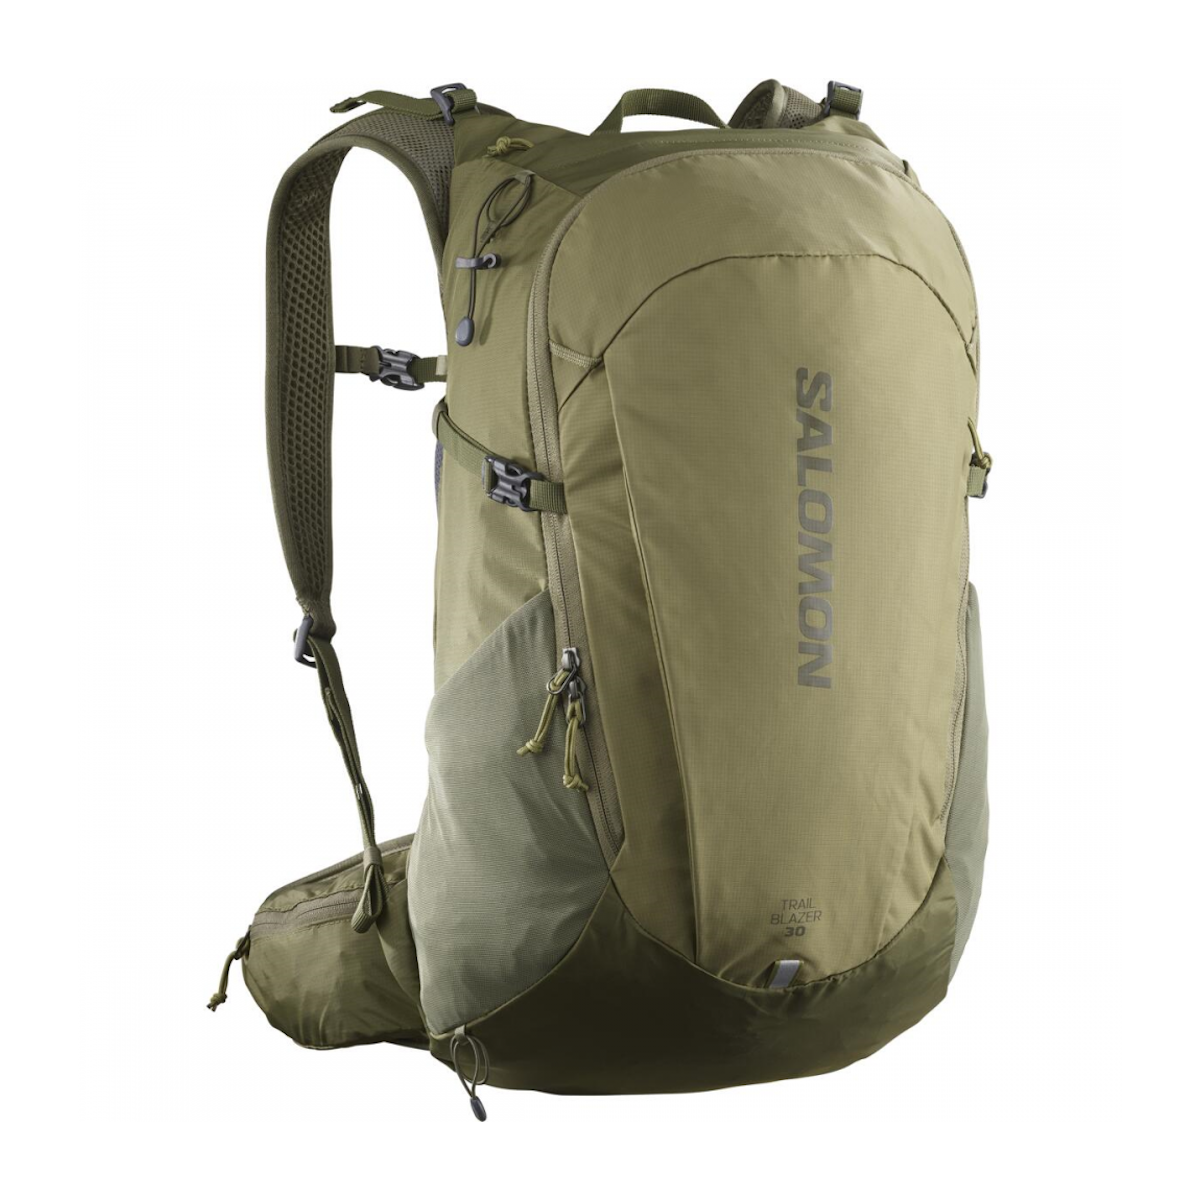 SALOMON TRAILBLAZER 30 backpack - dark green/green